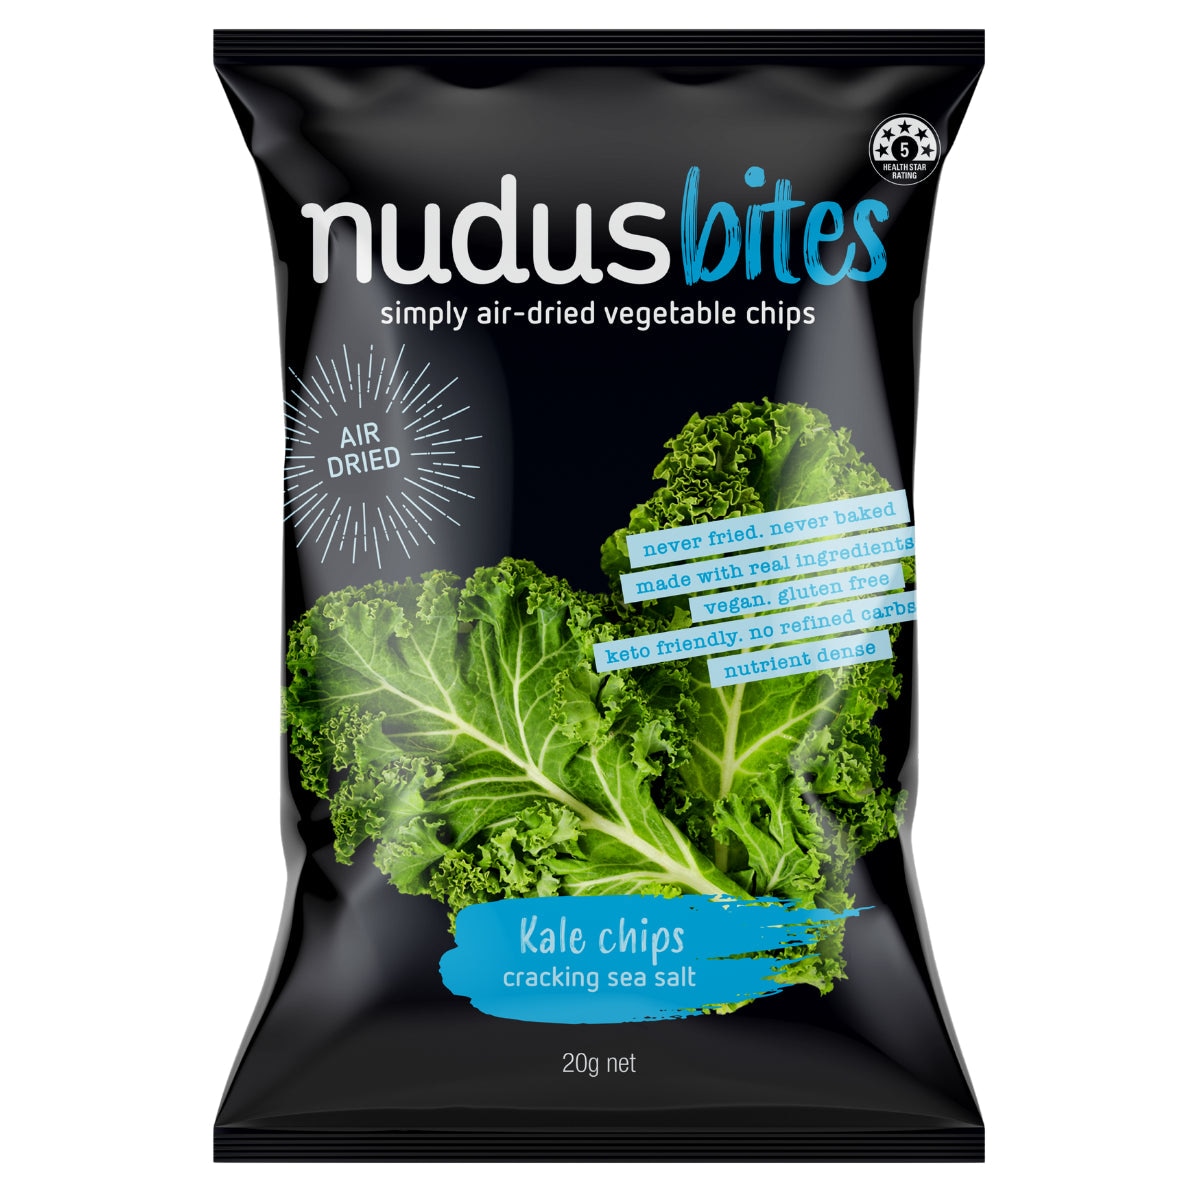 Nudus Bites Air-Dried Kale Cracking Sea Salt Chips 20g